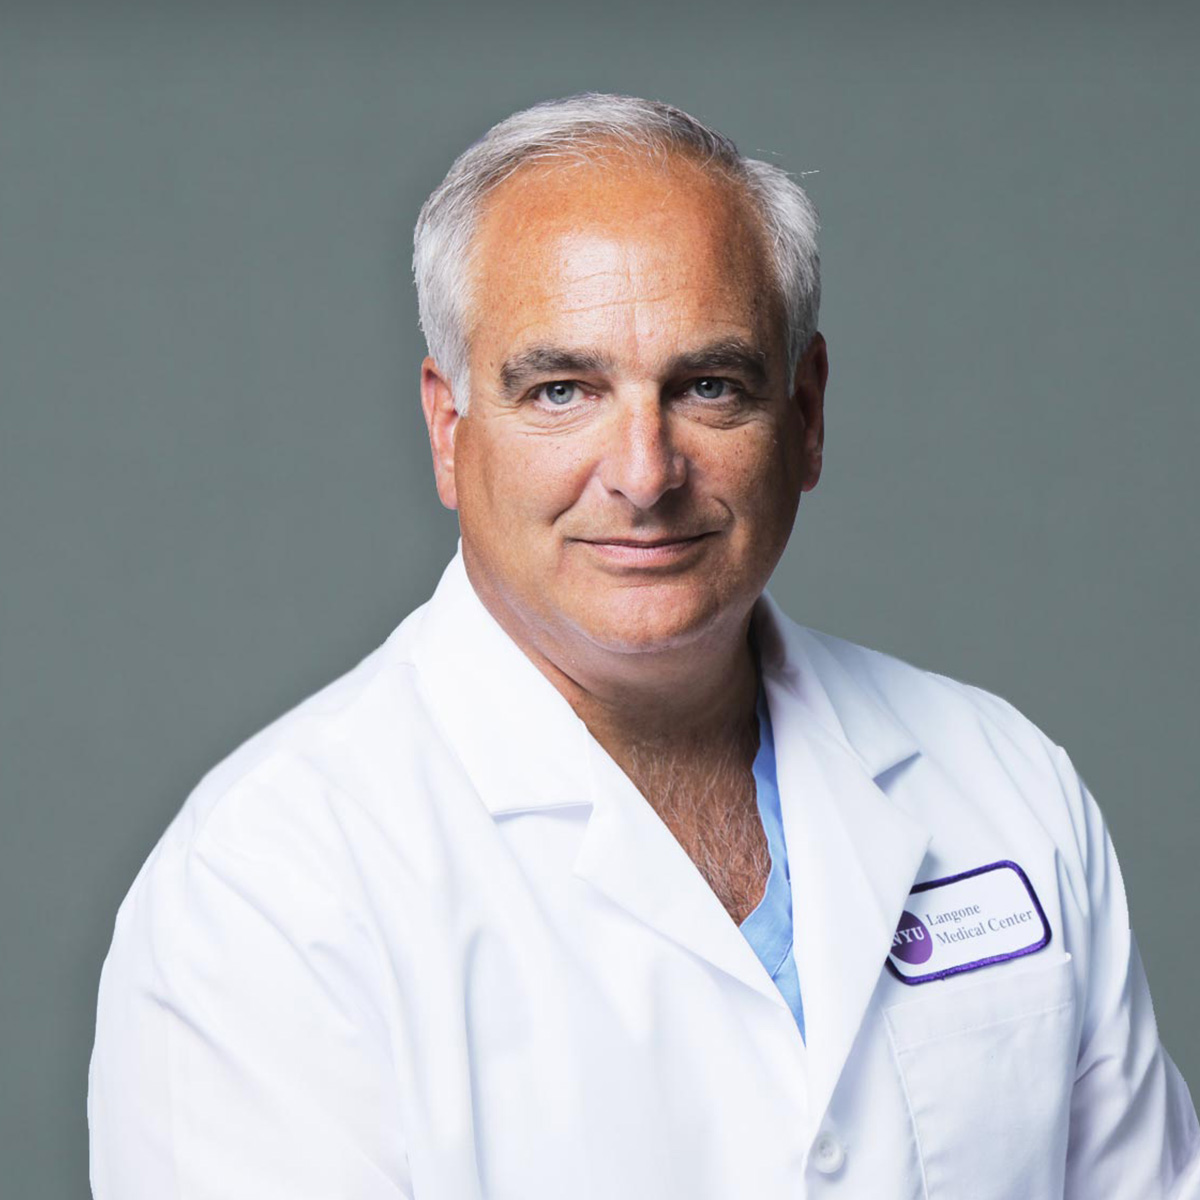 Michael J. Attubato,MD. Interventional Cardiology, Cardiology